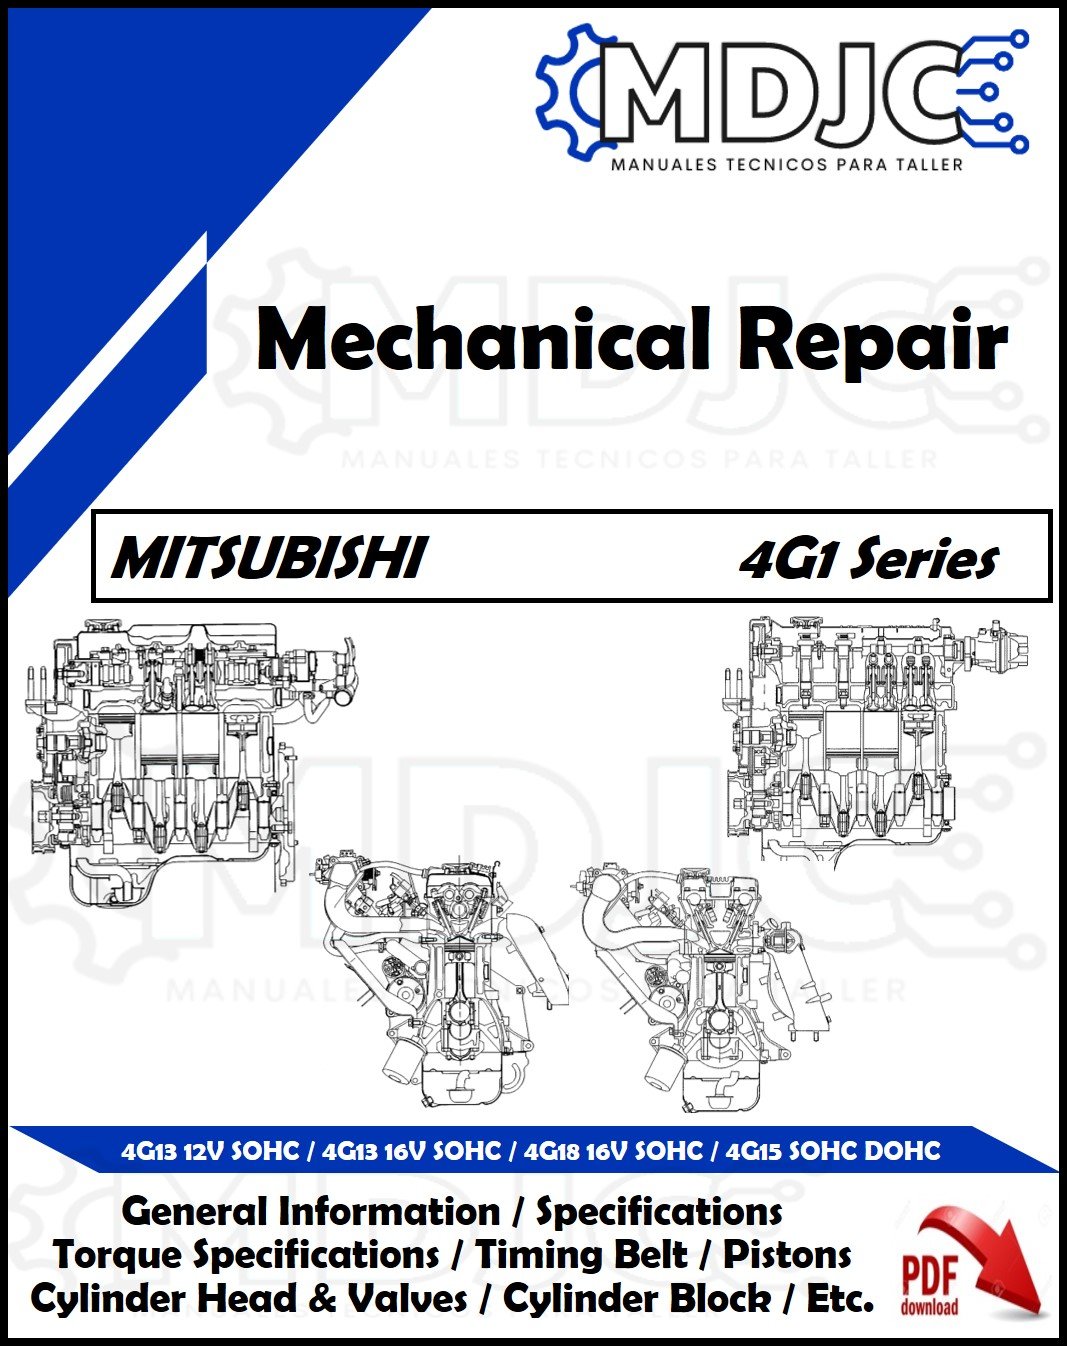 Manual de Taller (Reparación Mecanica) Mitsubishi 4G13 / 4G15 / 4G18